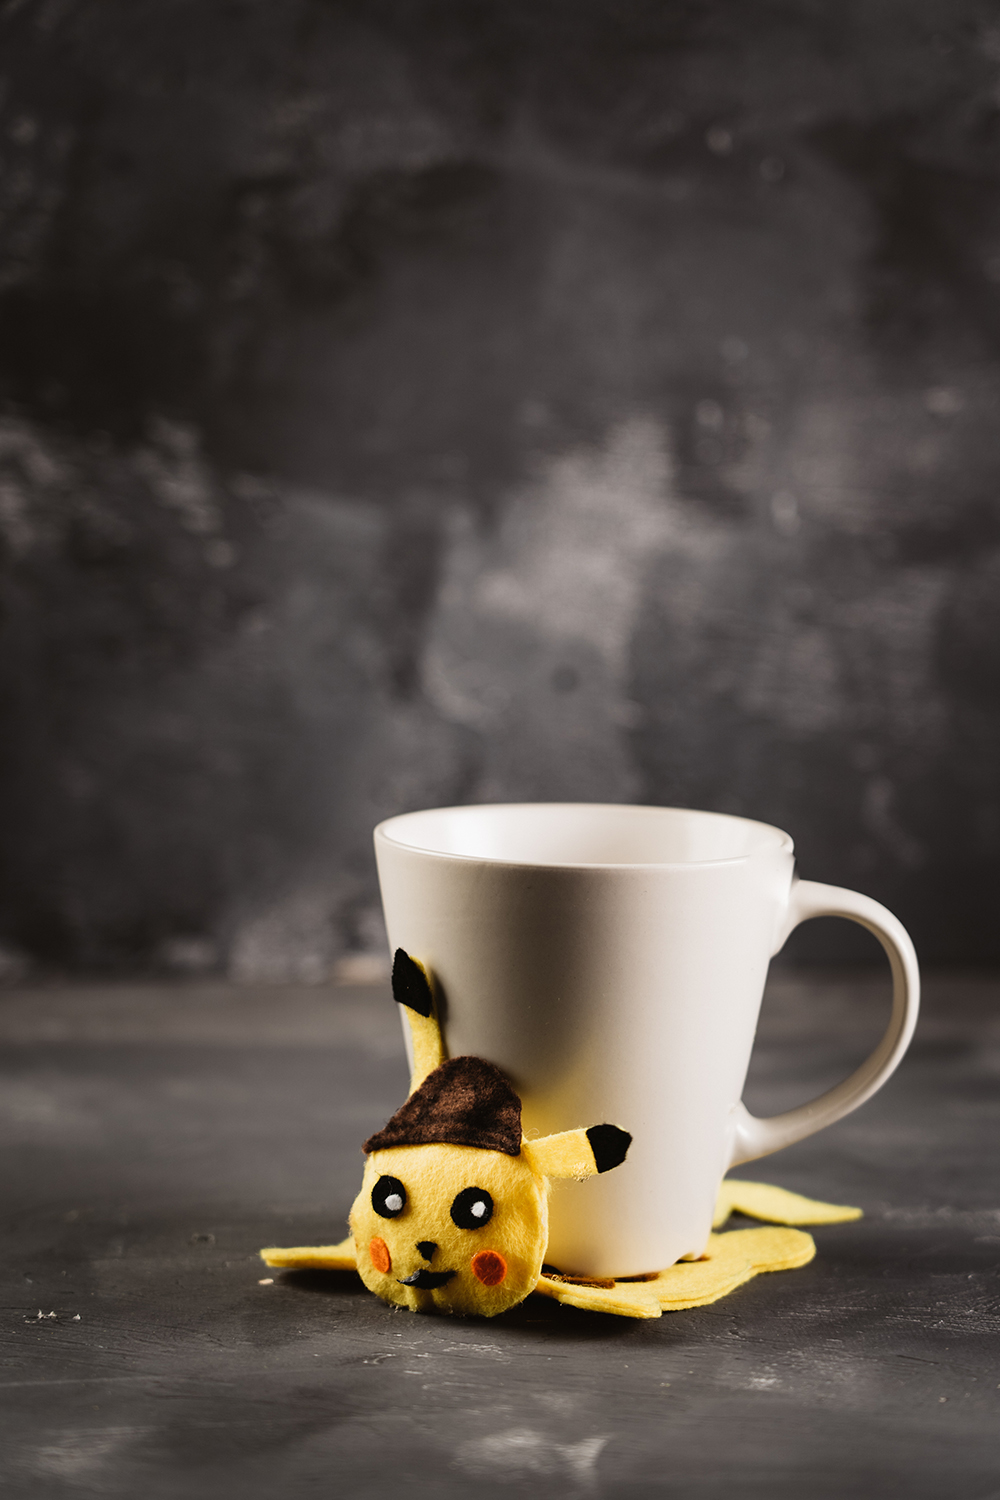 diy pikachu coaster and cup warmer